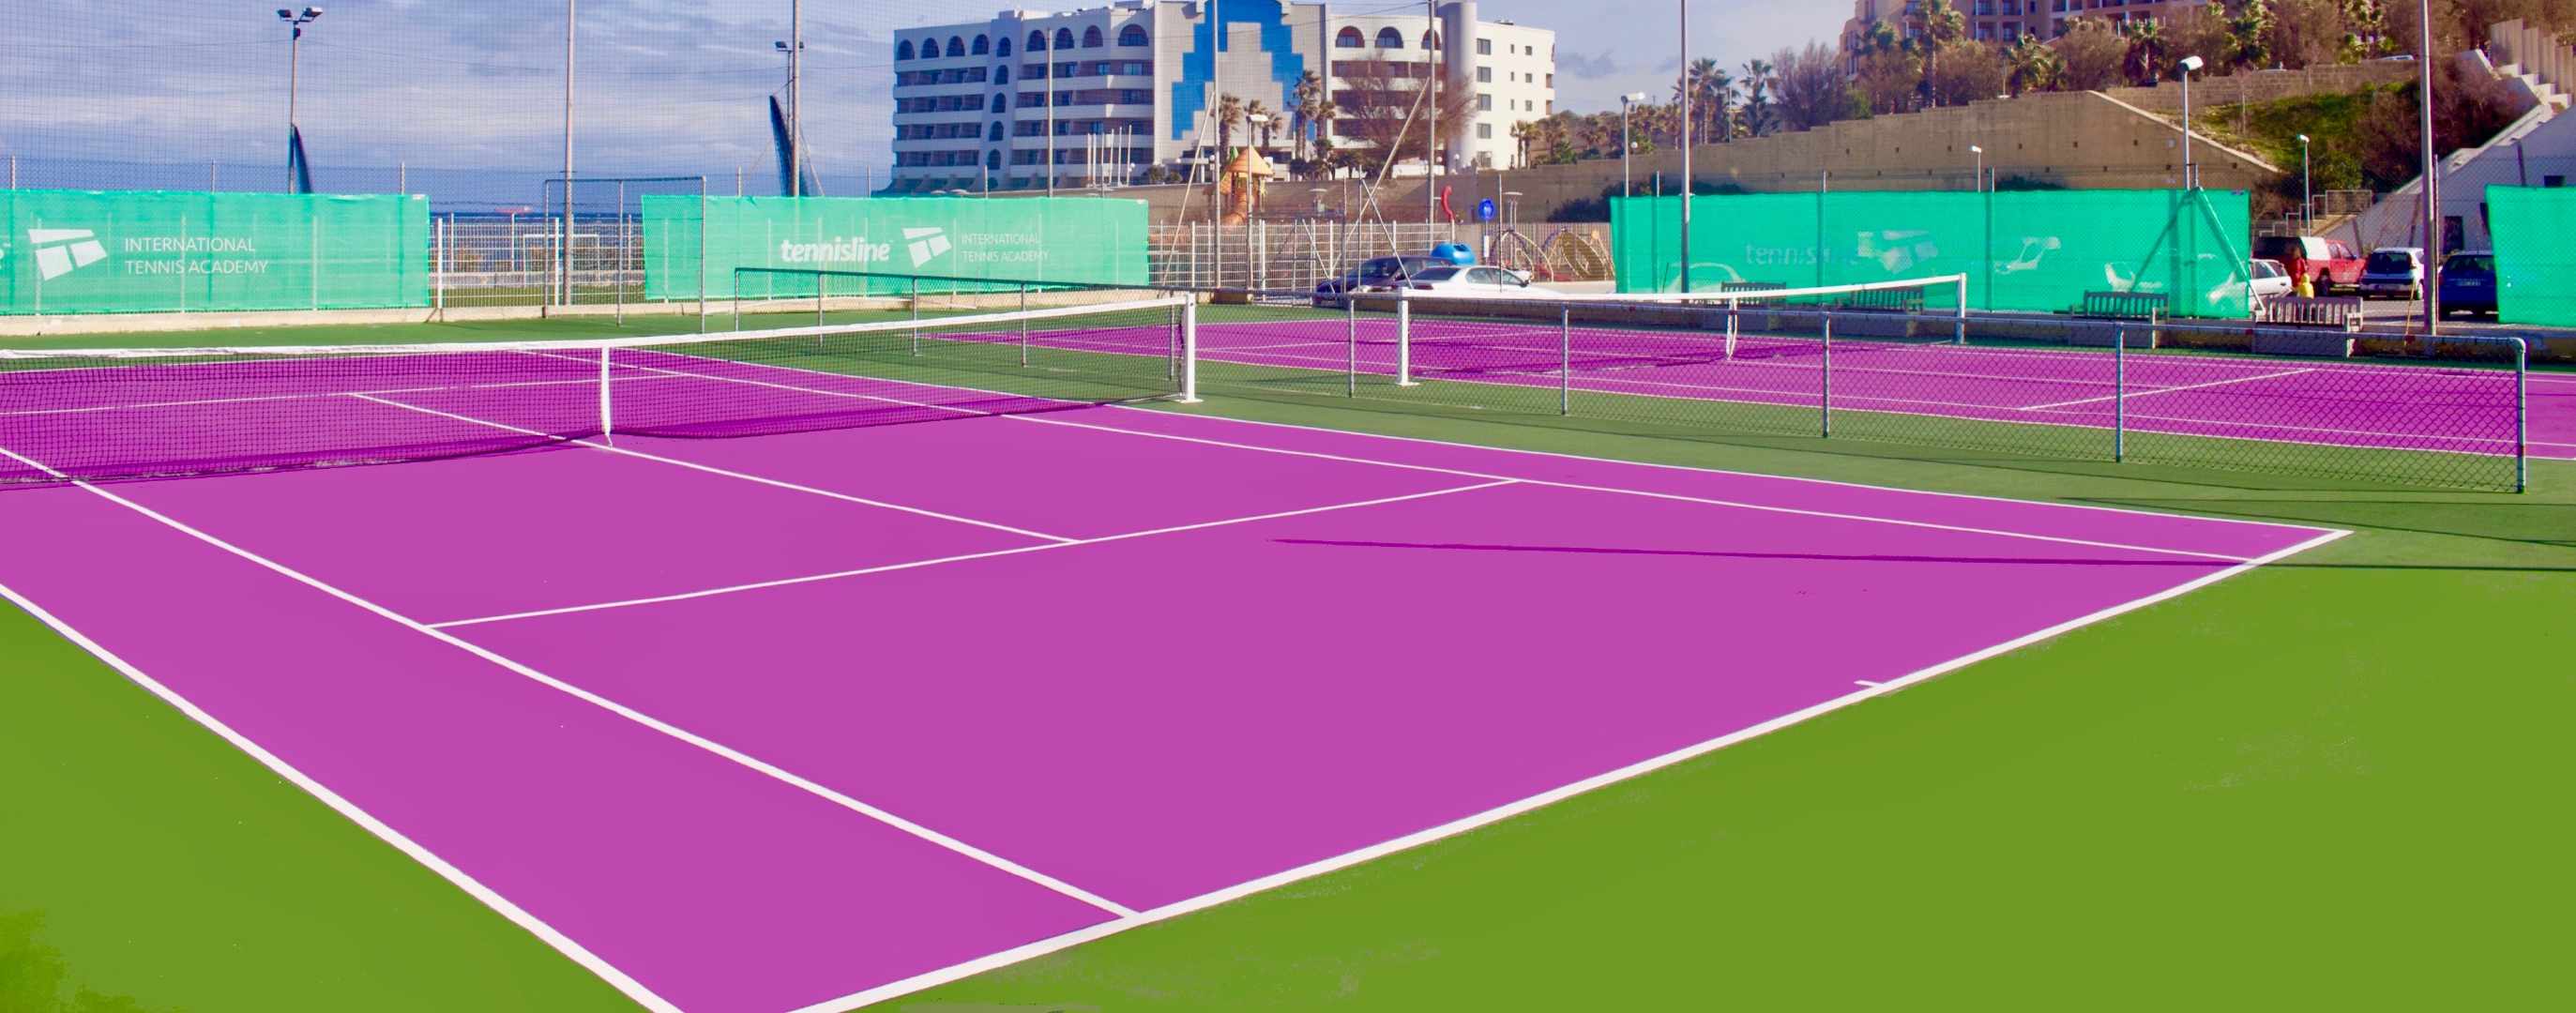 Tennisline International Tennis Academy Pembroke Malta